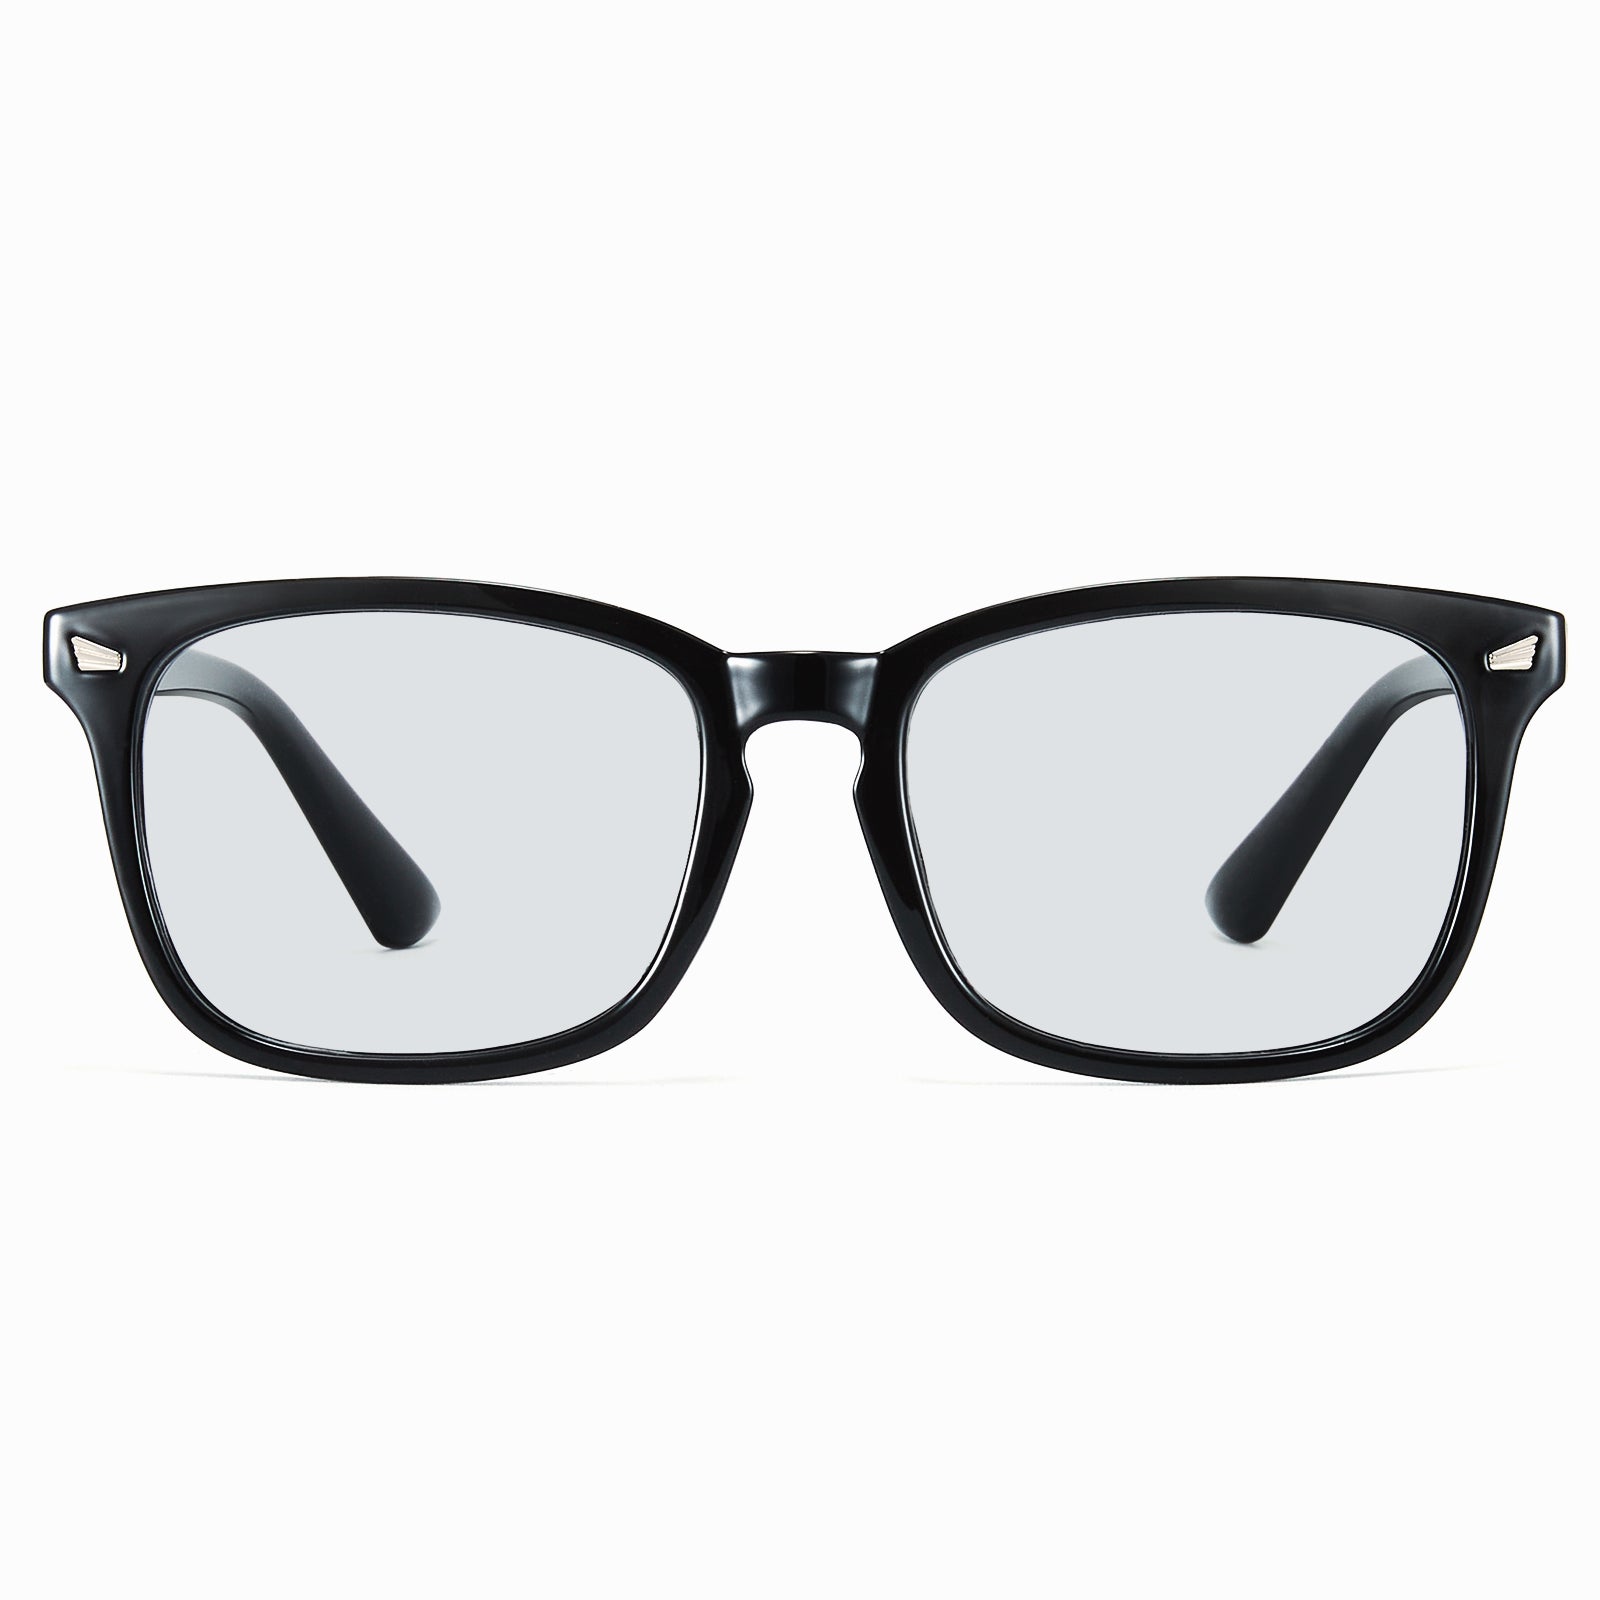 Sleep Glasses Wing Upgrade